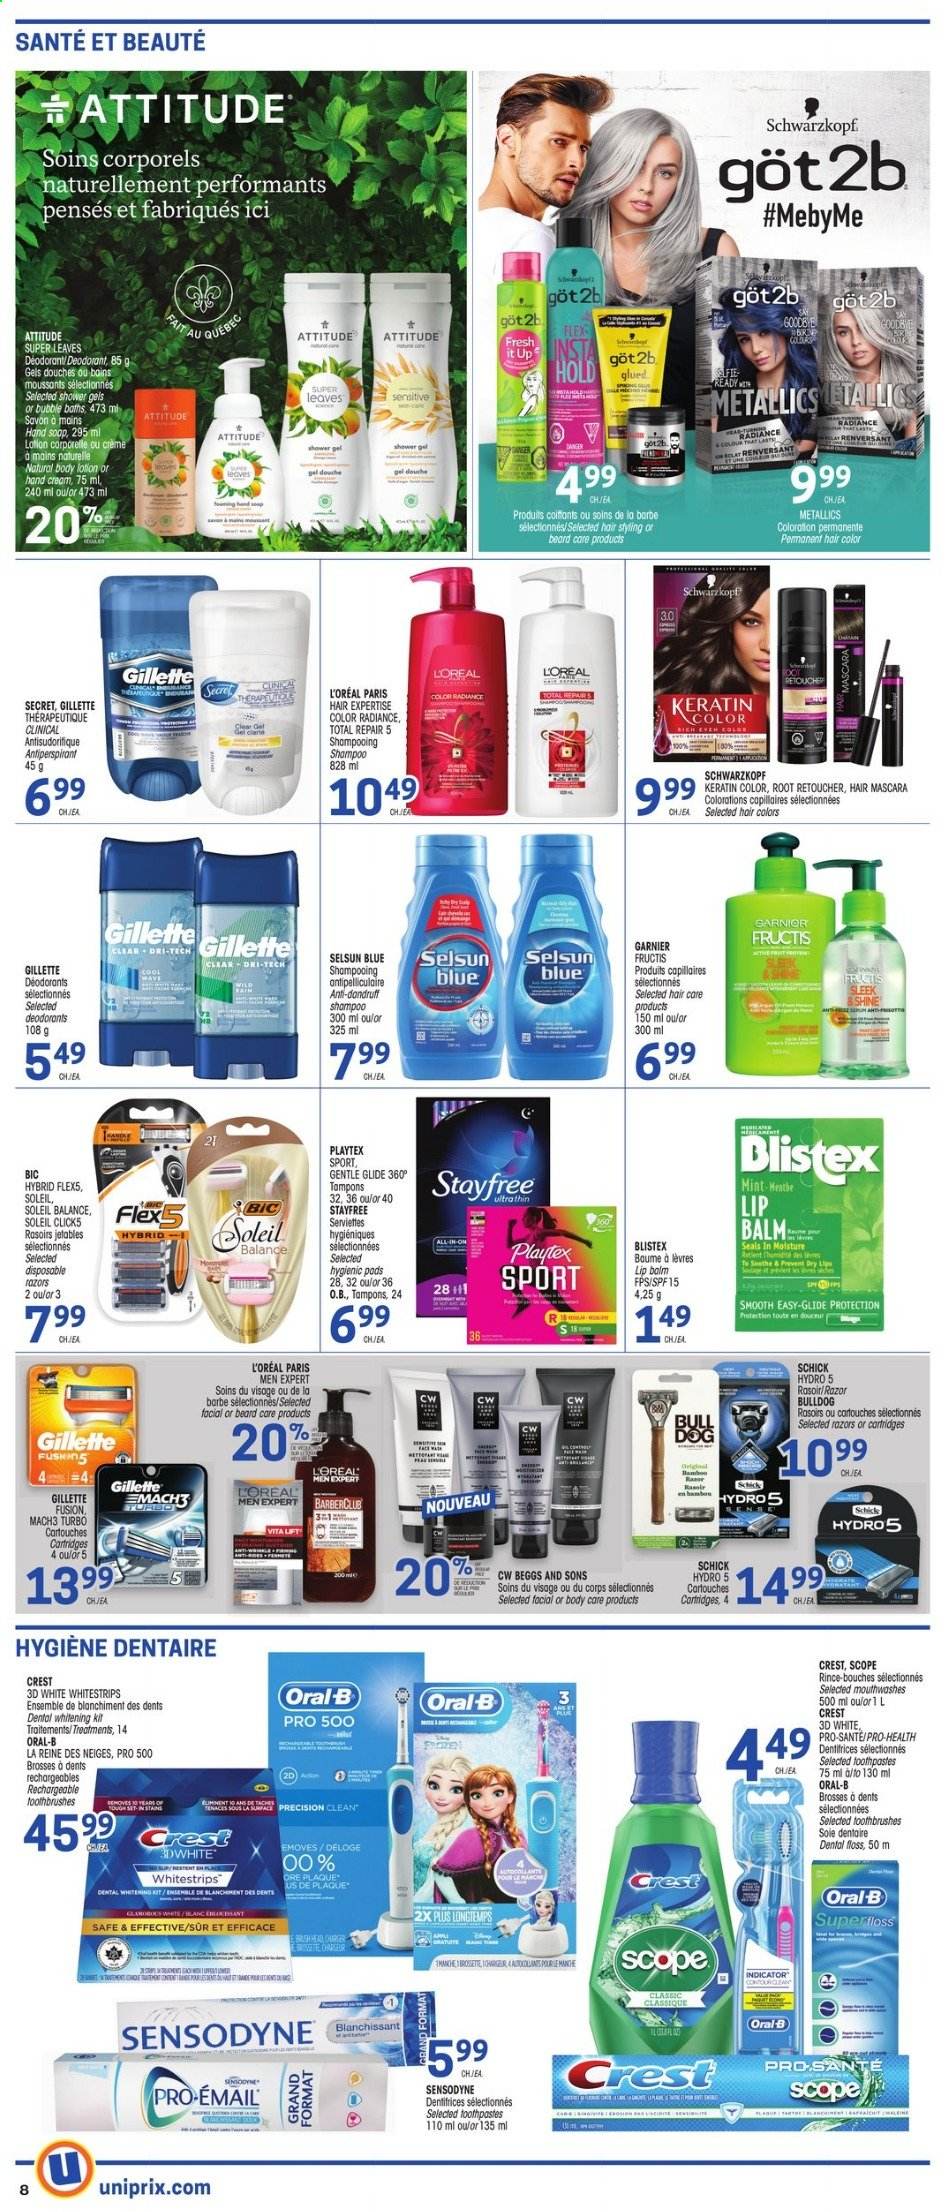 thumbnail - Uniprix Flyer - January 14, 2021 - January 20, 2021 - Sales products - Crest, Stayfree, Playtex, tampons, L’Oréal, lip balm, L’Oréal Men, hair color, keratin, Fructis, body lotion, hand cream, anti-perspirant, BIC, razor, Schick, disposable razor, Garnier, Gillette, mascara, shampoo, Oral-B, Sensodyne, deodorant. Page 7.